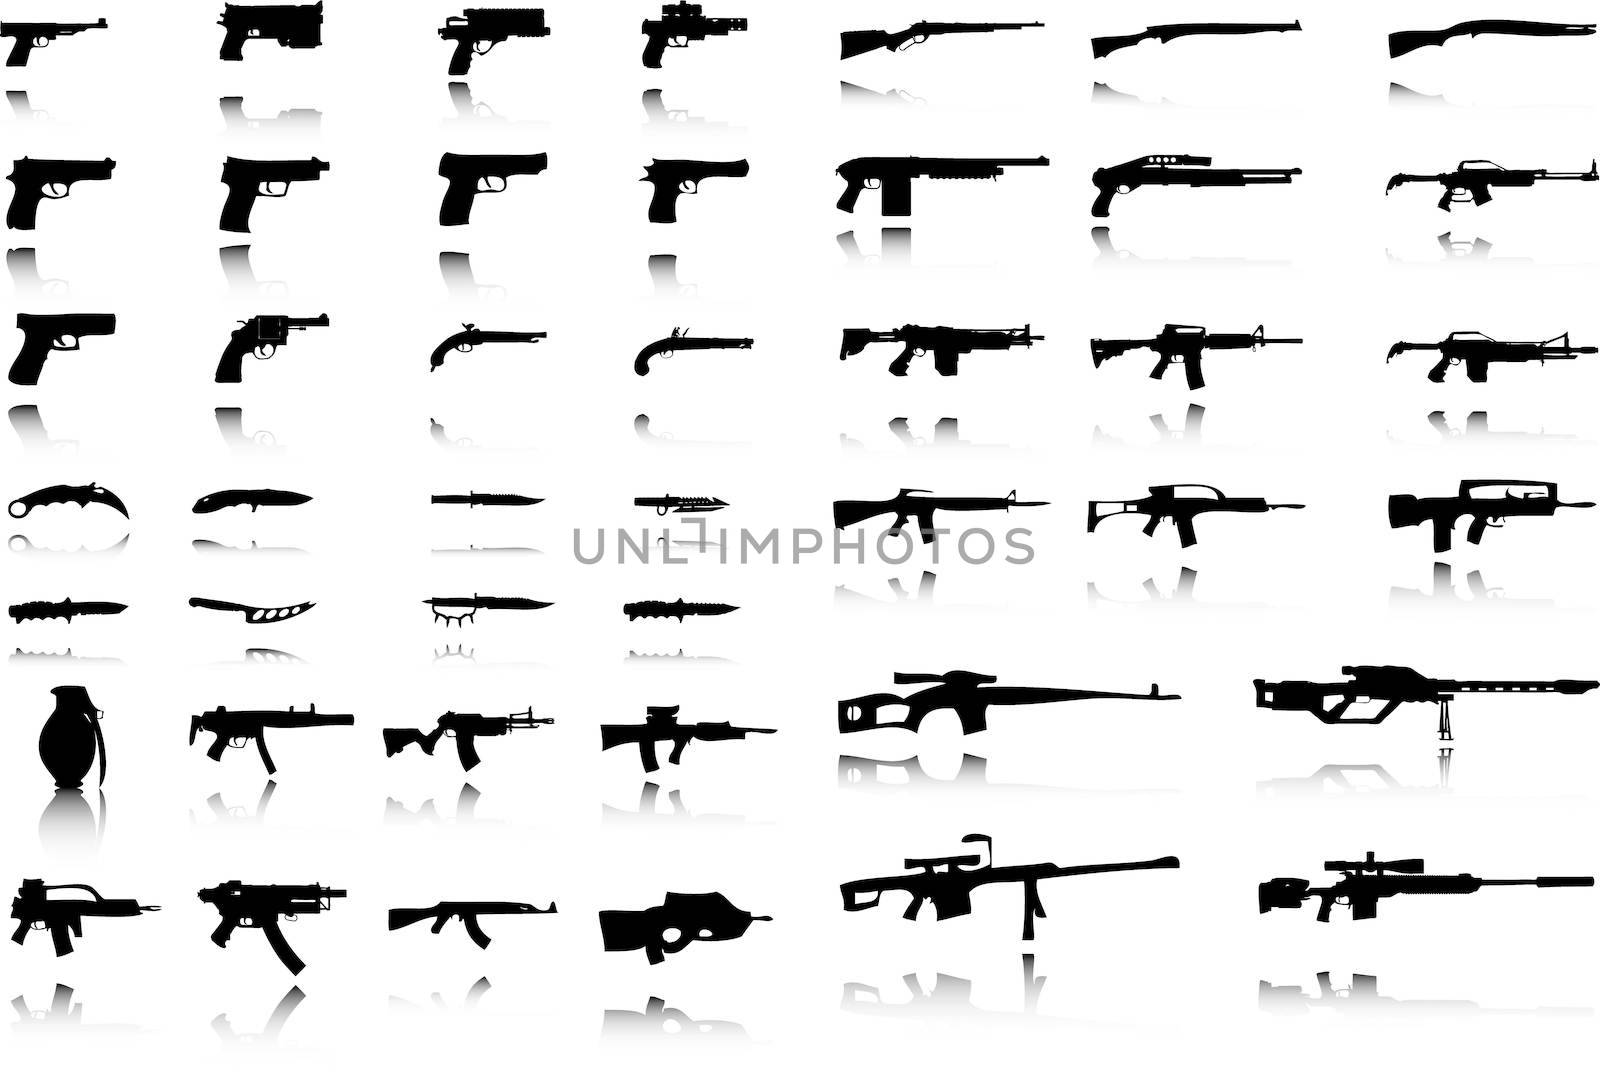 Illustration of Set of Weapons by DragonEyeMedia